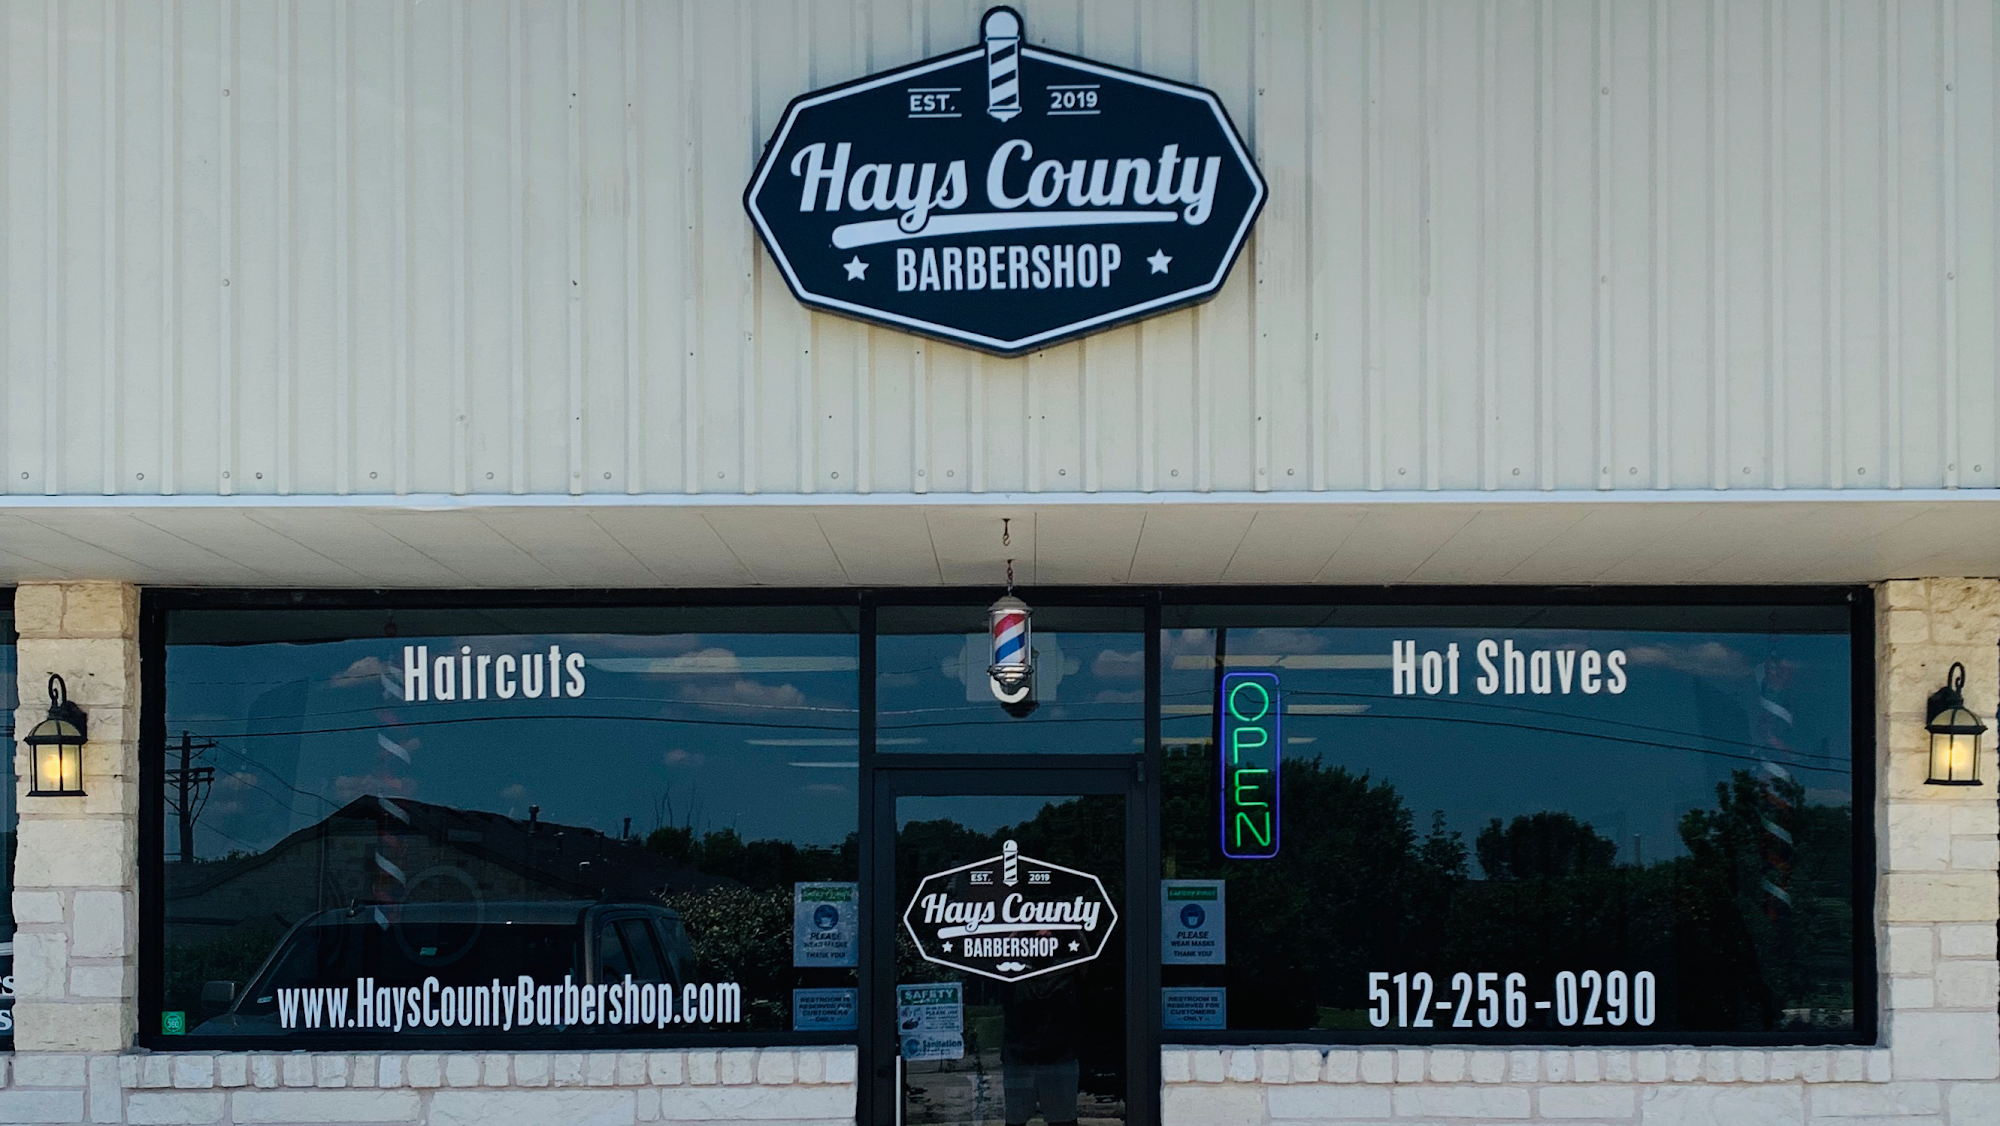 Hays County Barbershop